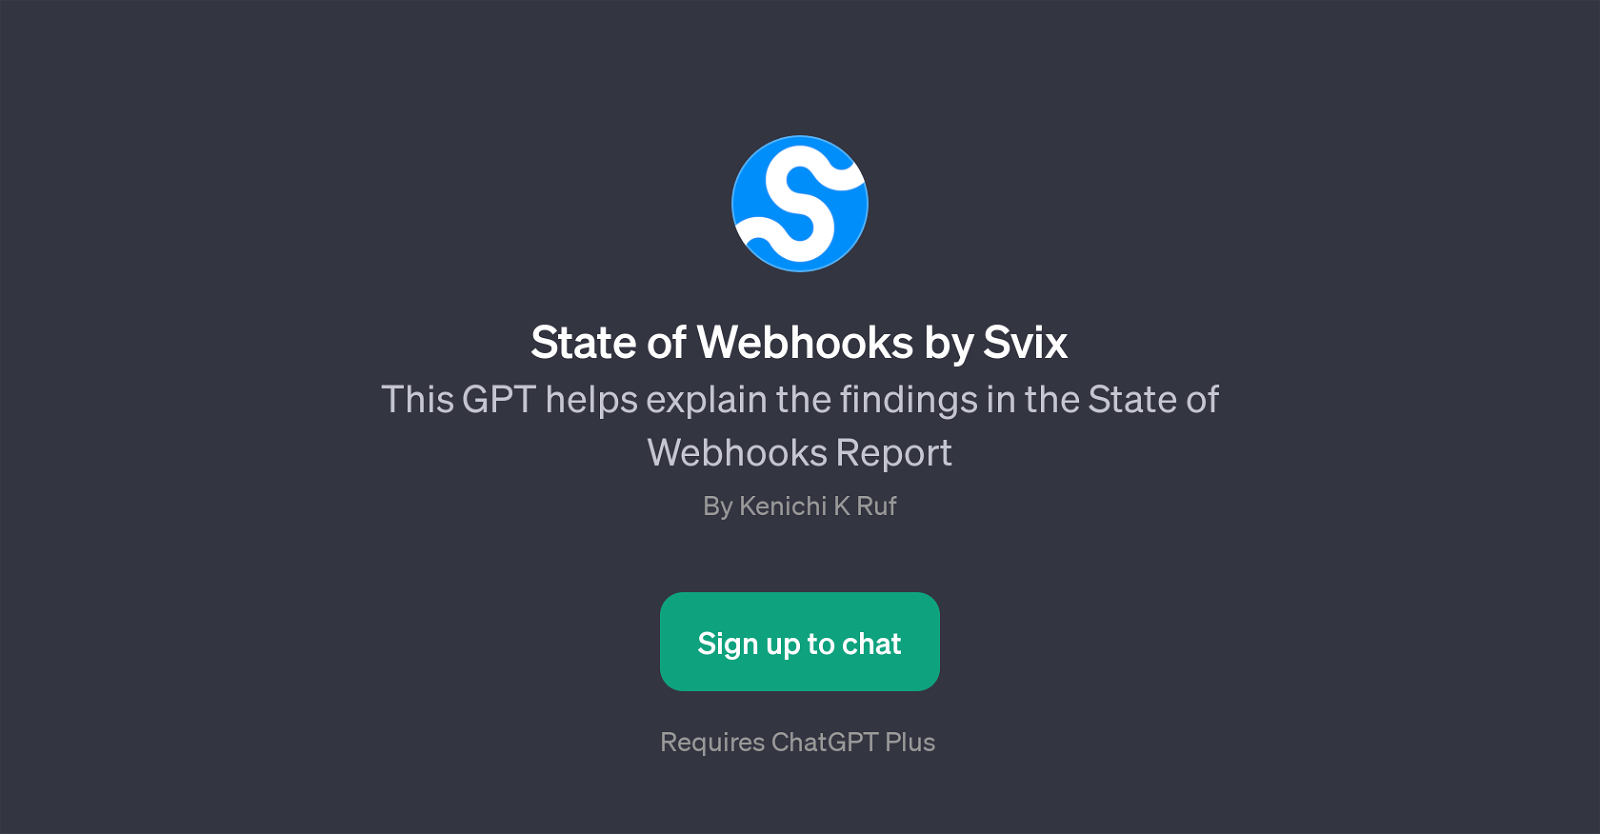 State of Webhooks by Svix website